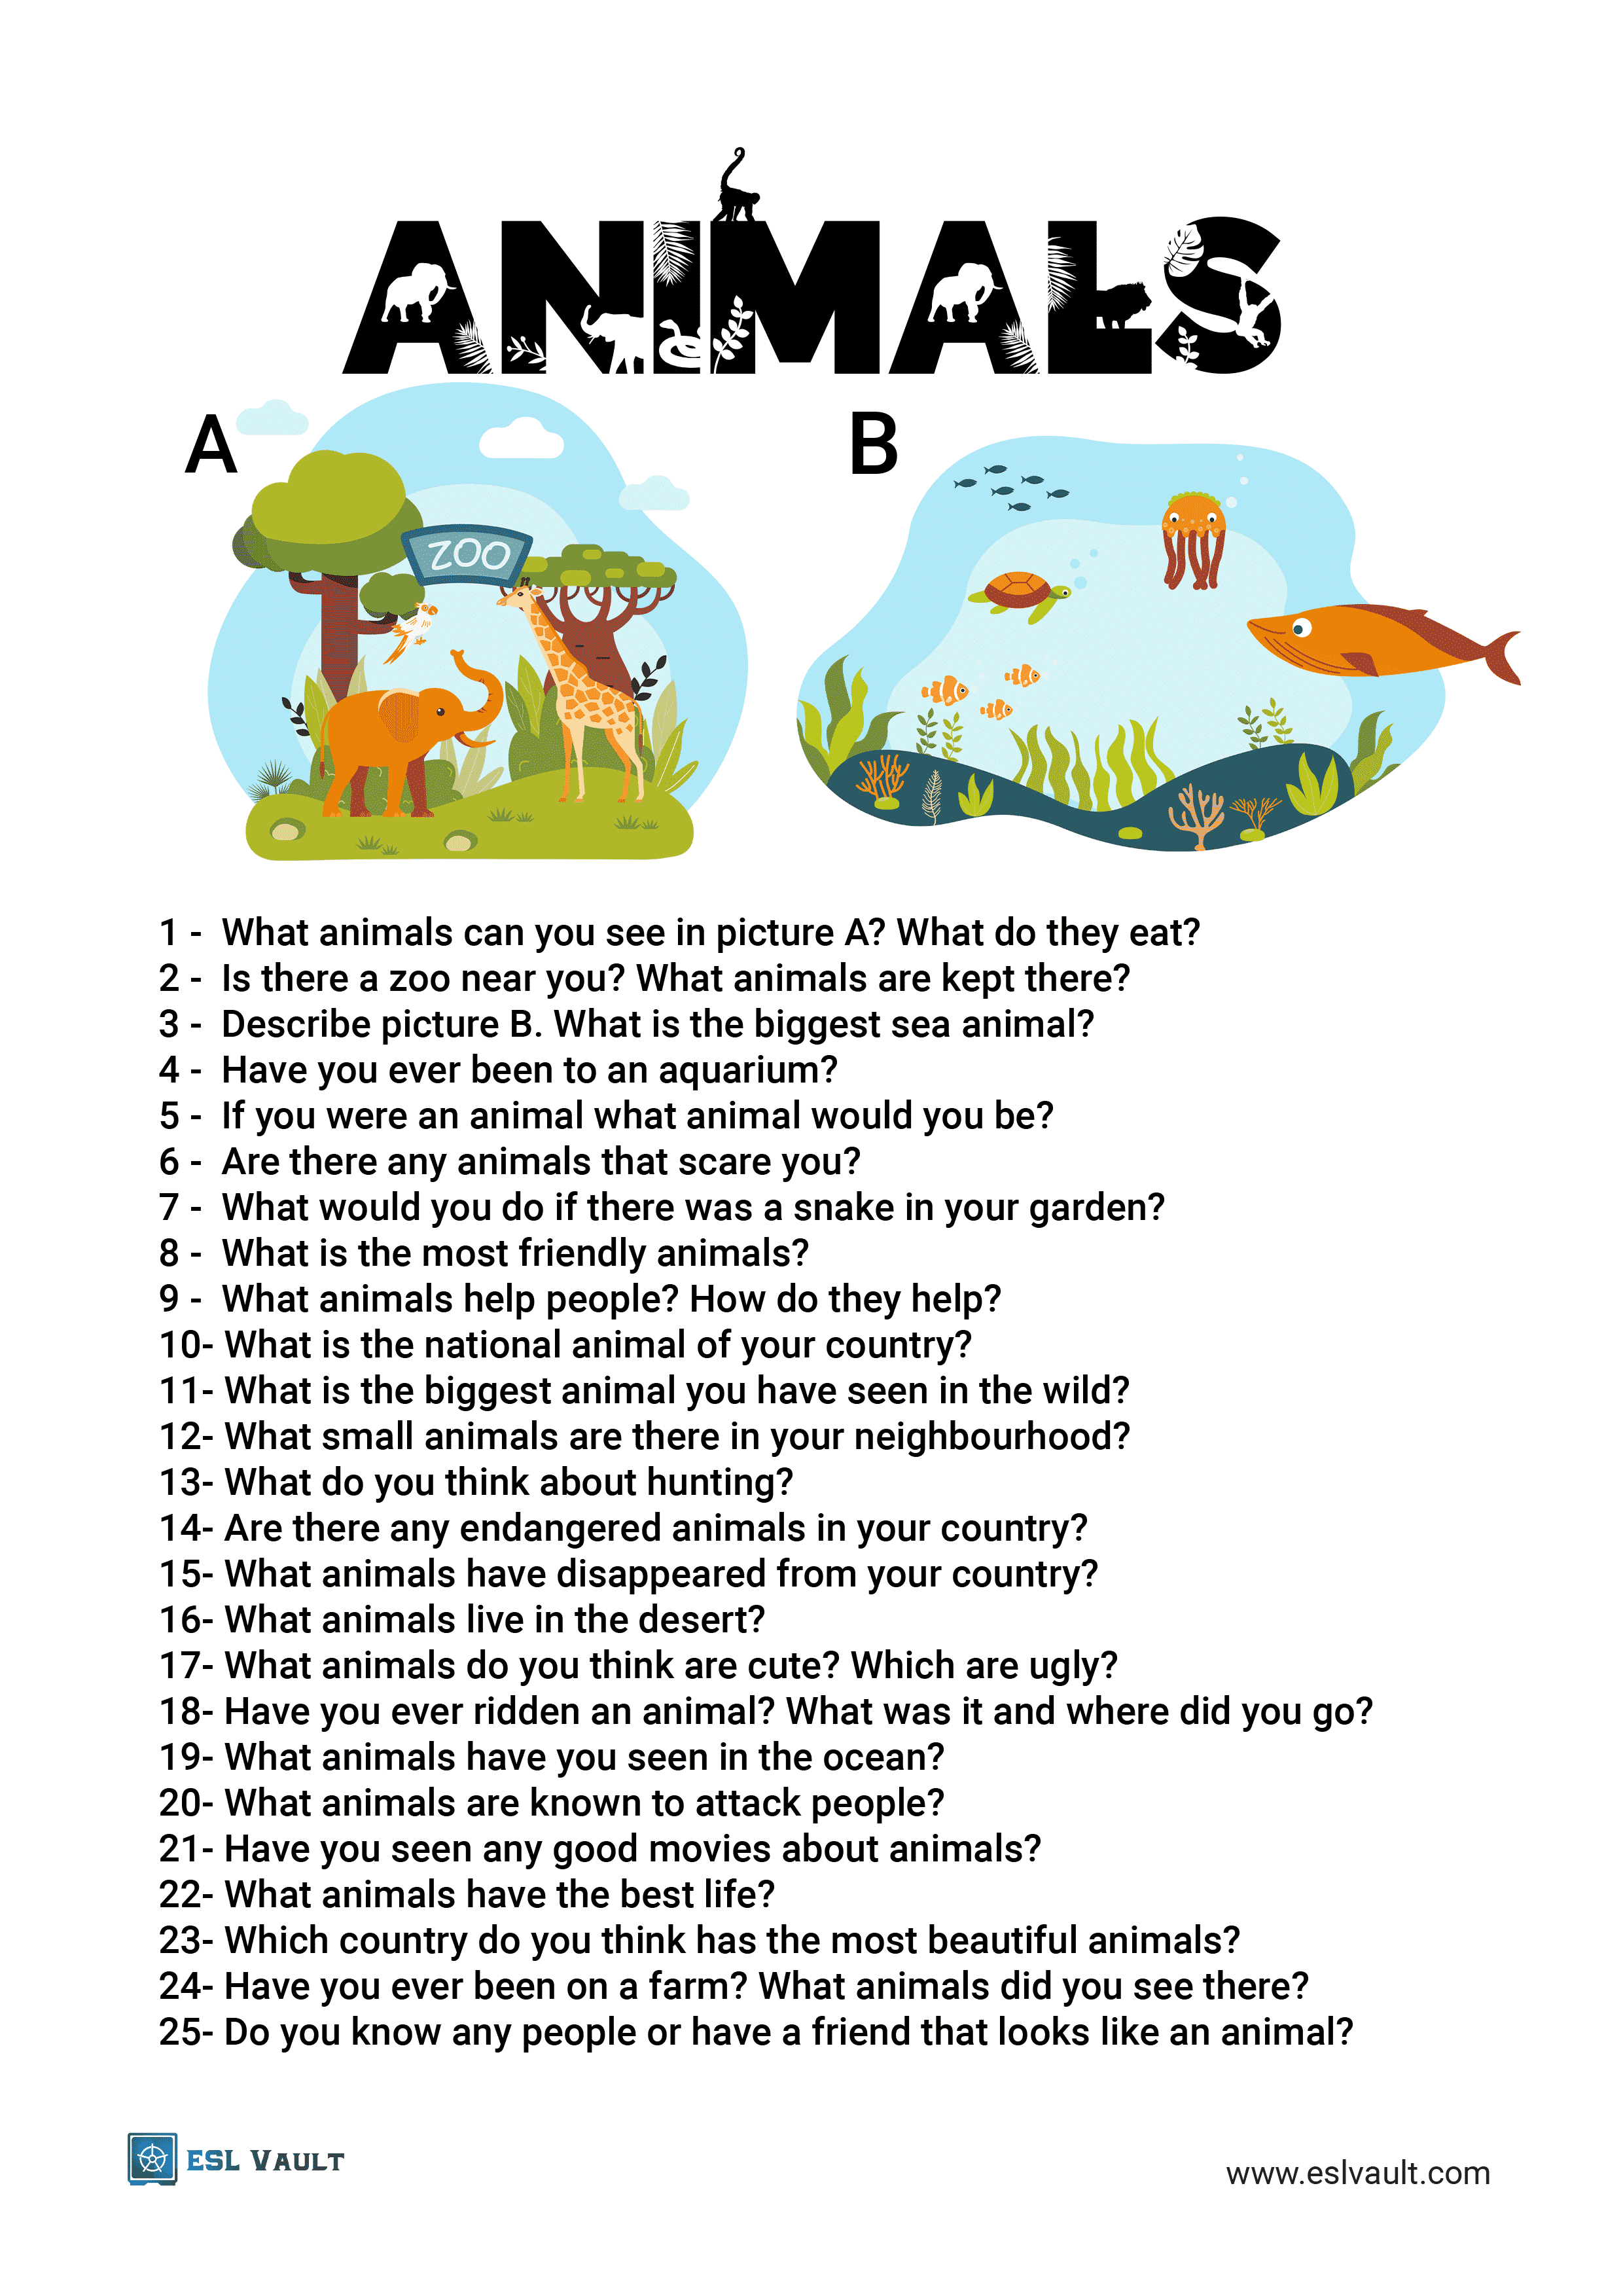 50 fun animal conversation questions - ESL Vault